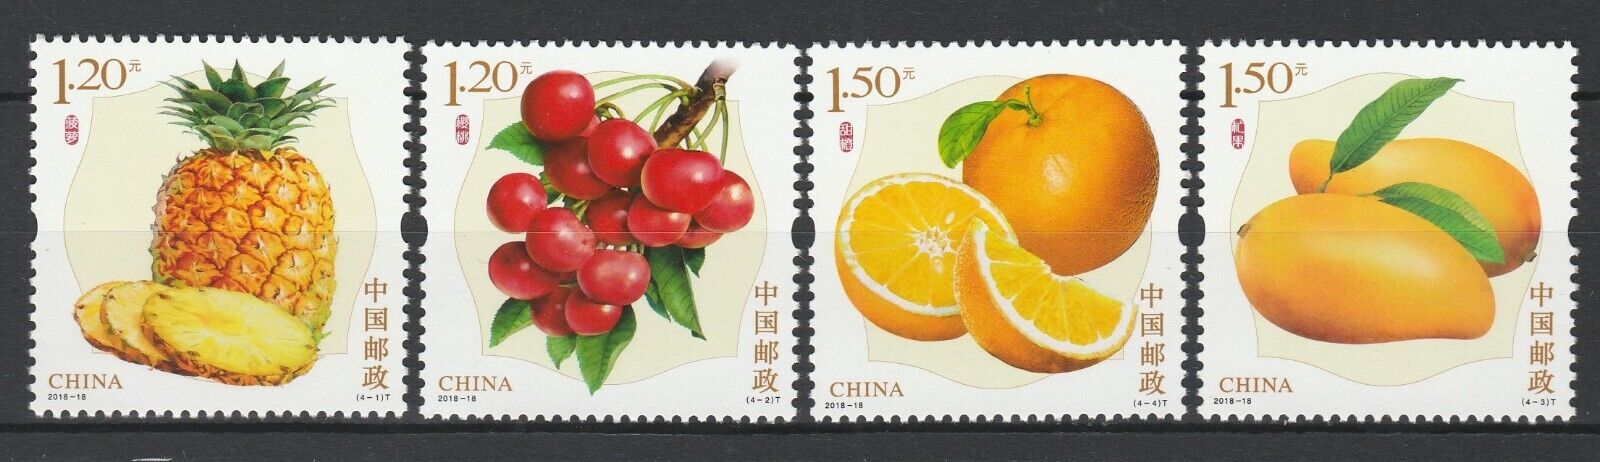 China 2018 Fruits 4 MNH stamps